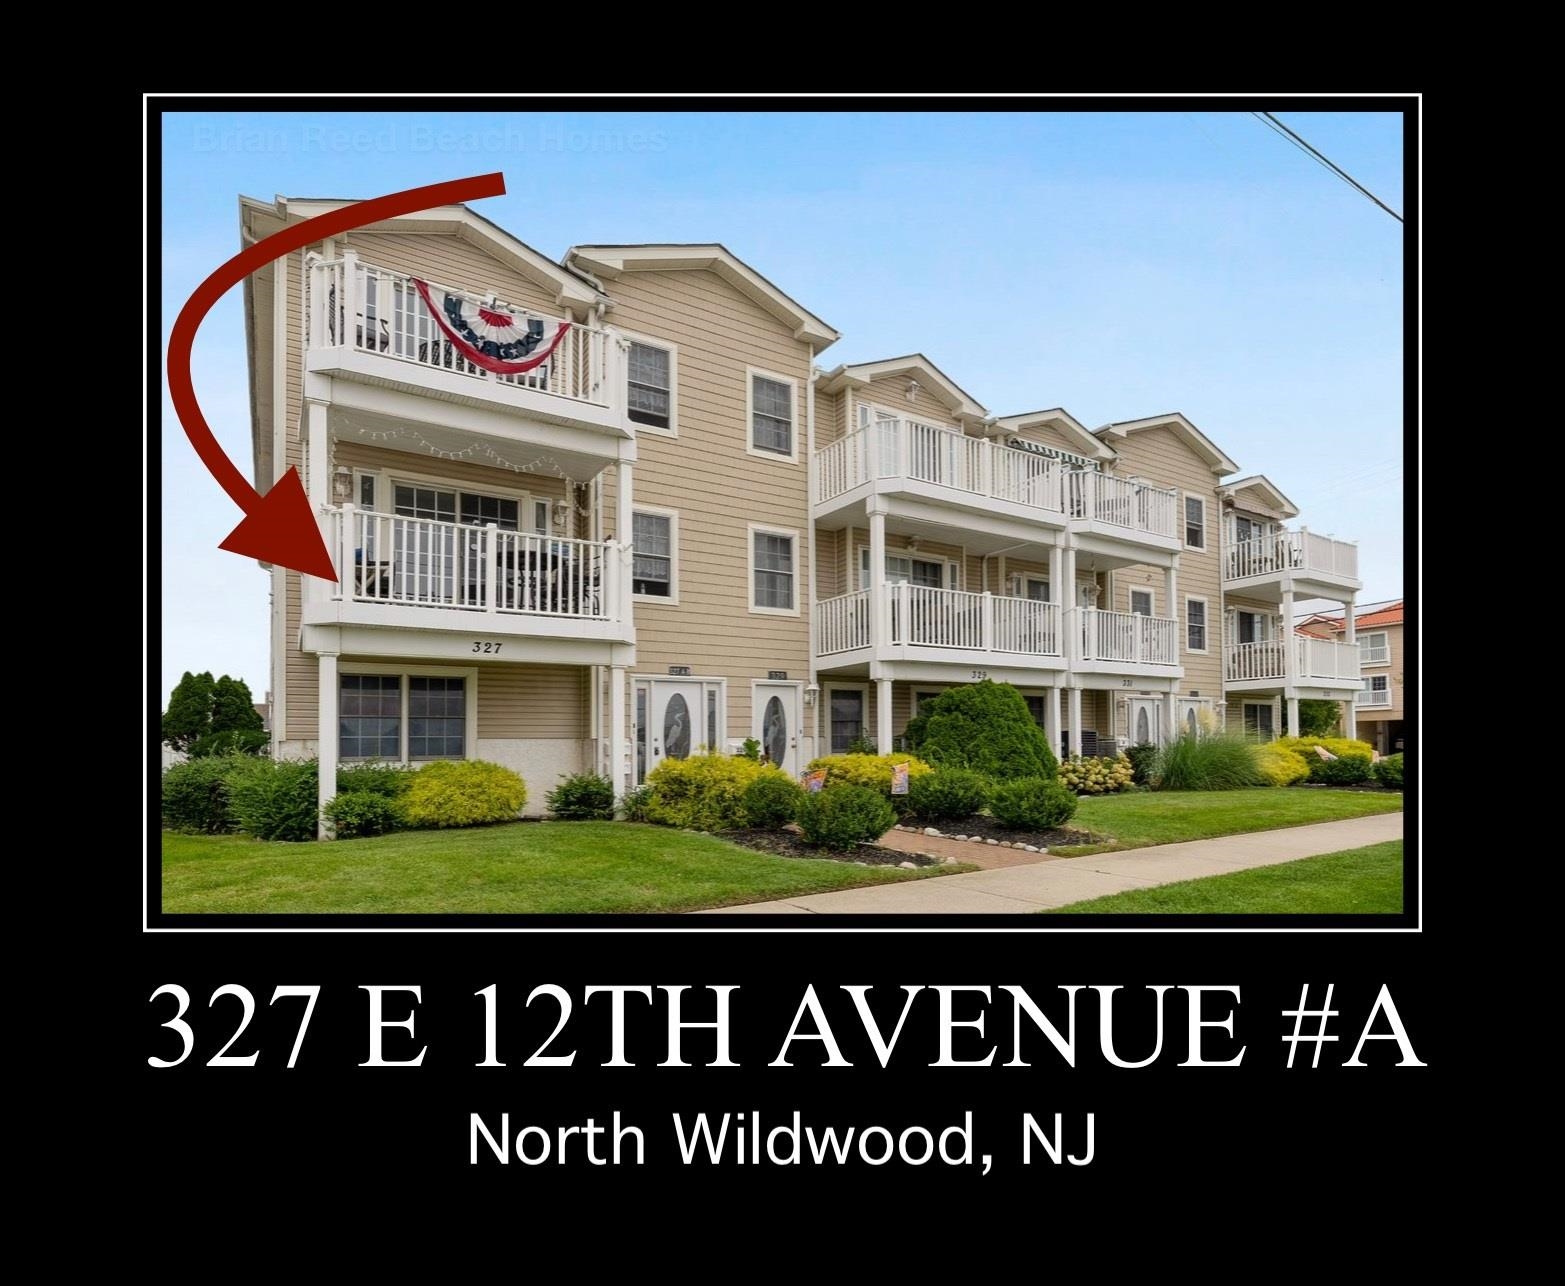 327 E 12th Avenue - North Wildwood